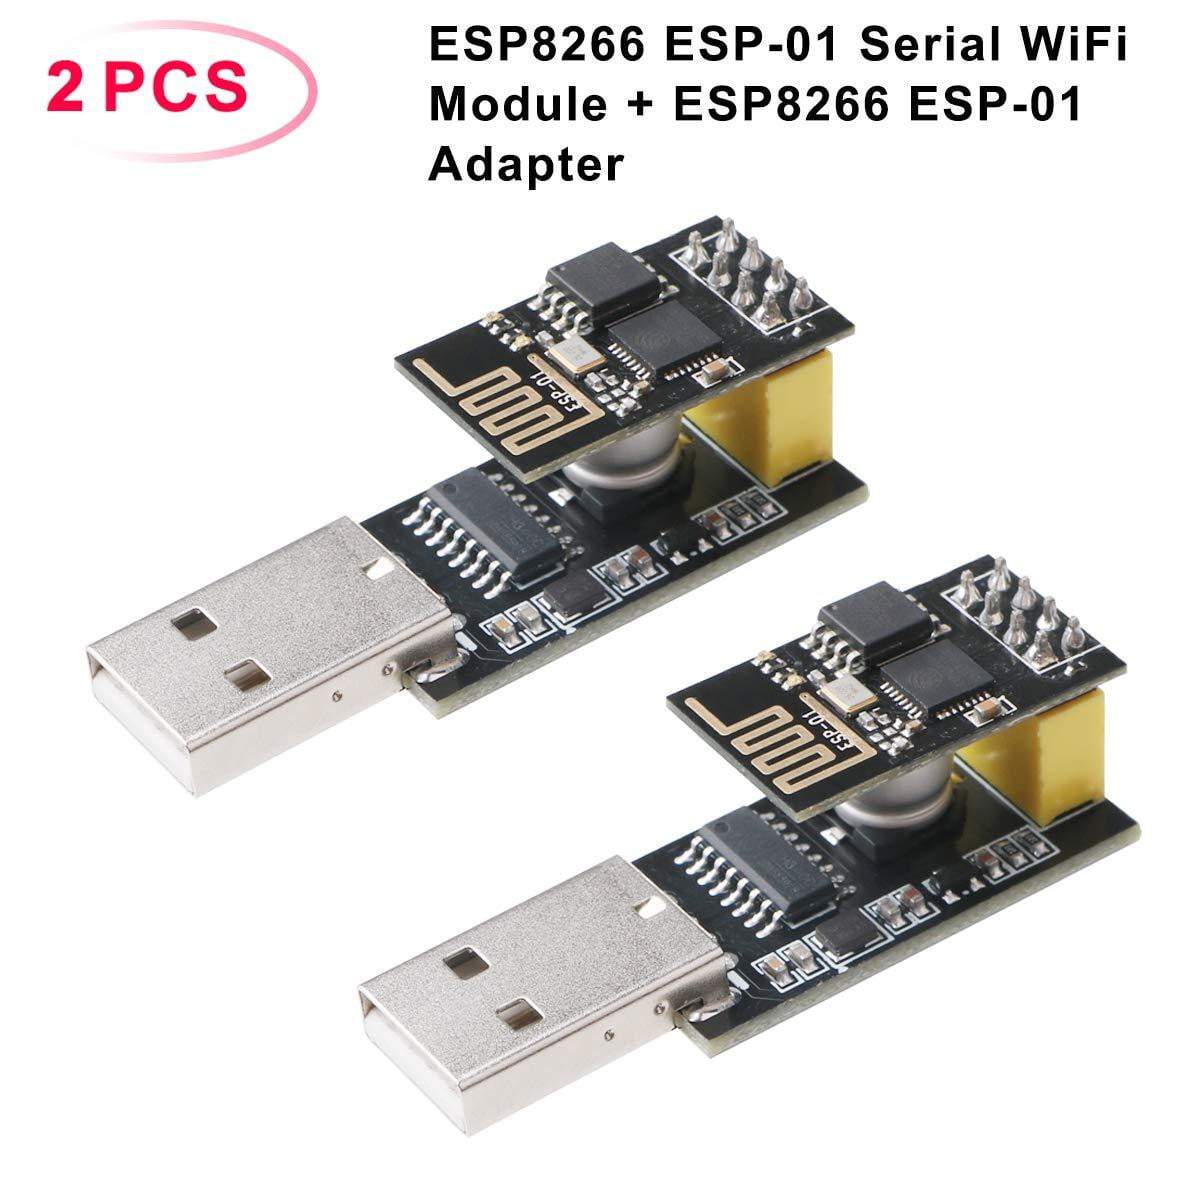 MakerFocus 2pcs ESP8266 ESP-01 Serial Wireless Transceiver WiFi Module with  USB to ESP-01 Adapter